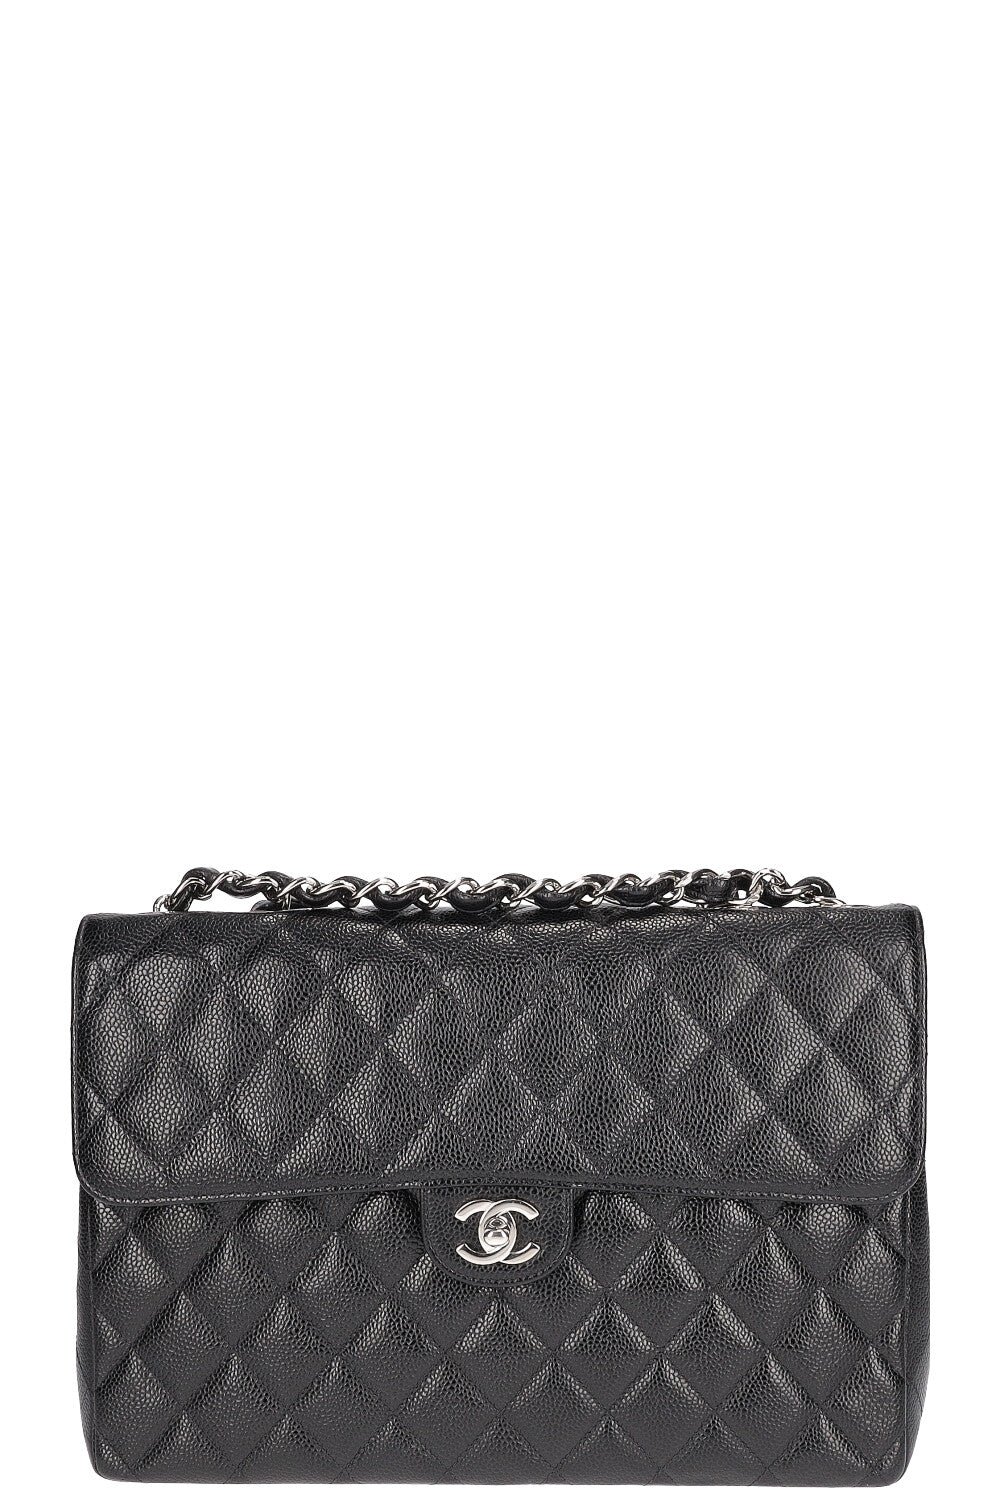 Chanel Single Flap Bag Black Caviar 